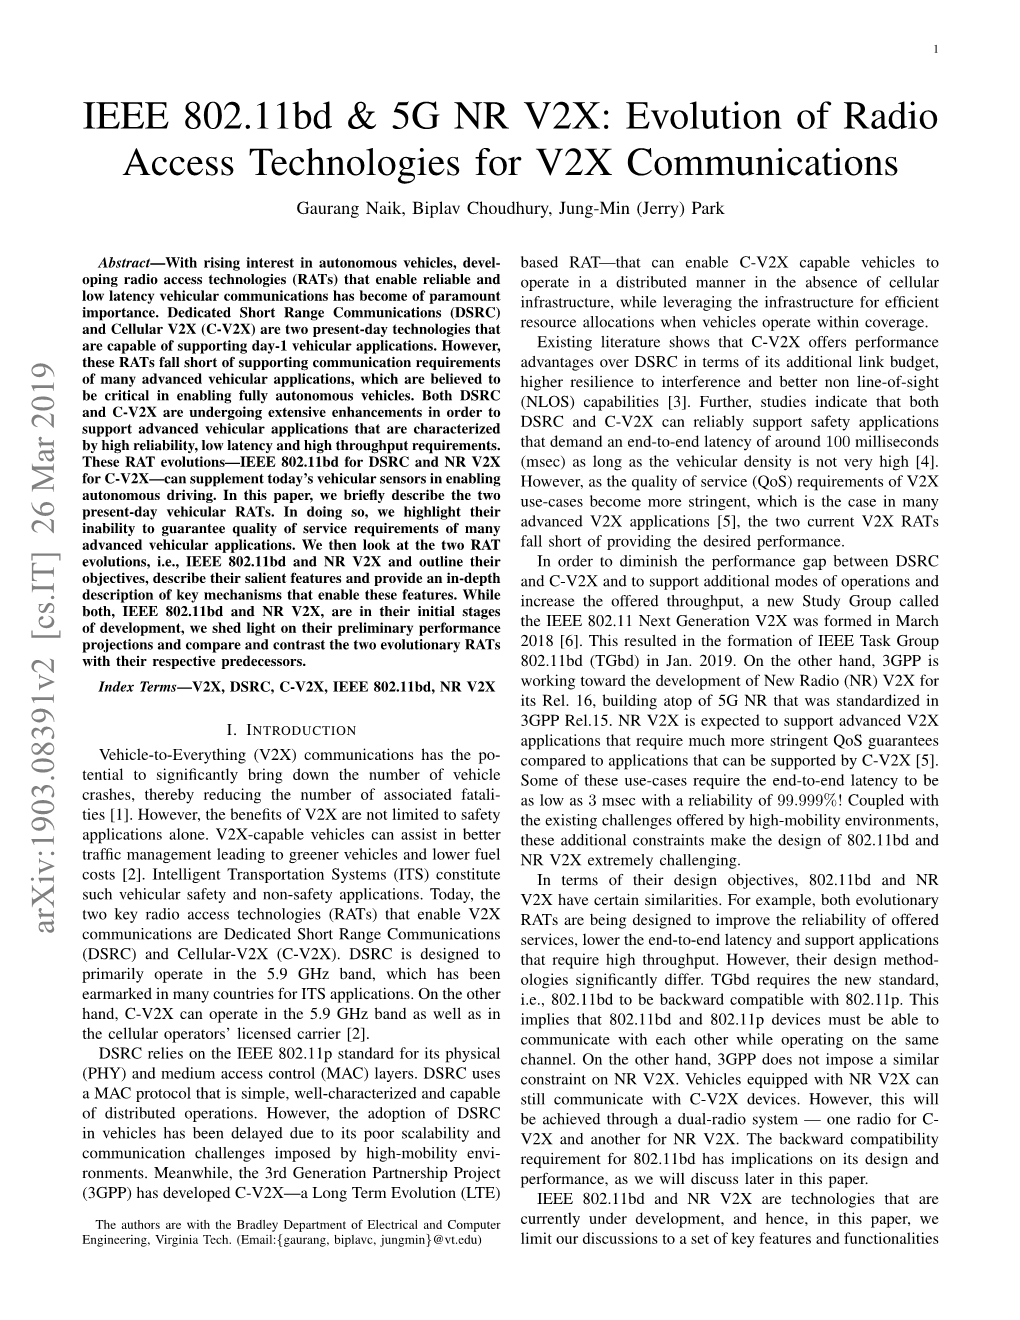 IEEE 802.11Bd & 5G NR V2X: Evolution of Radio Access